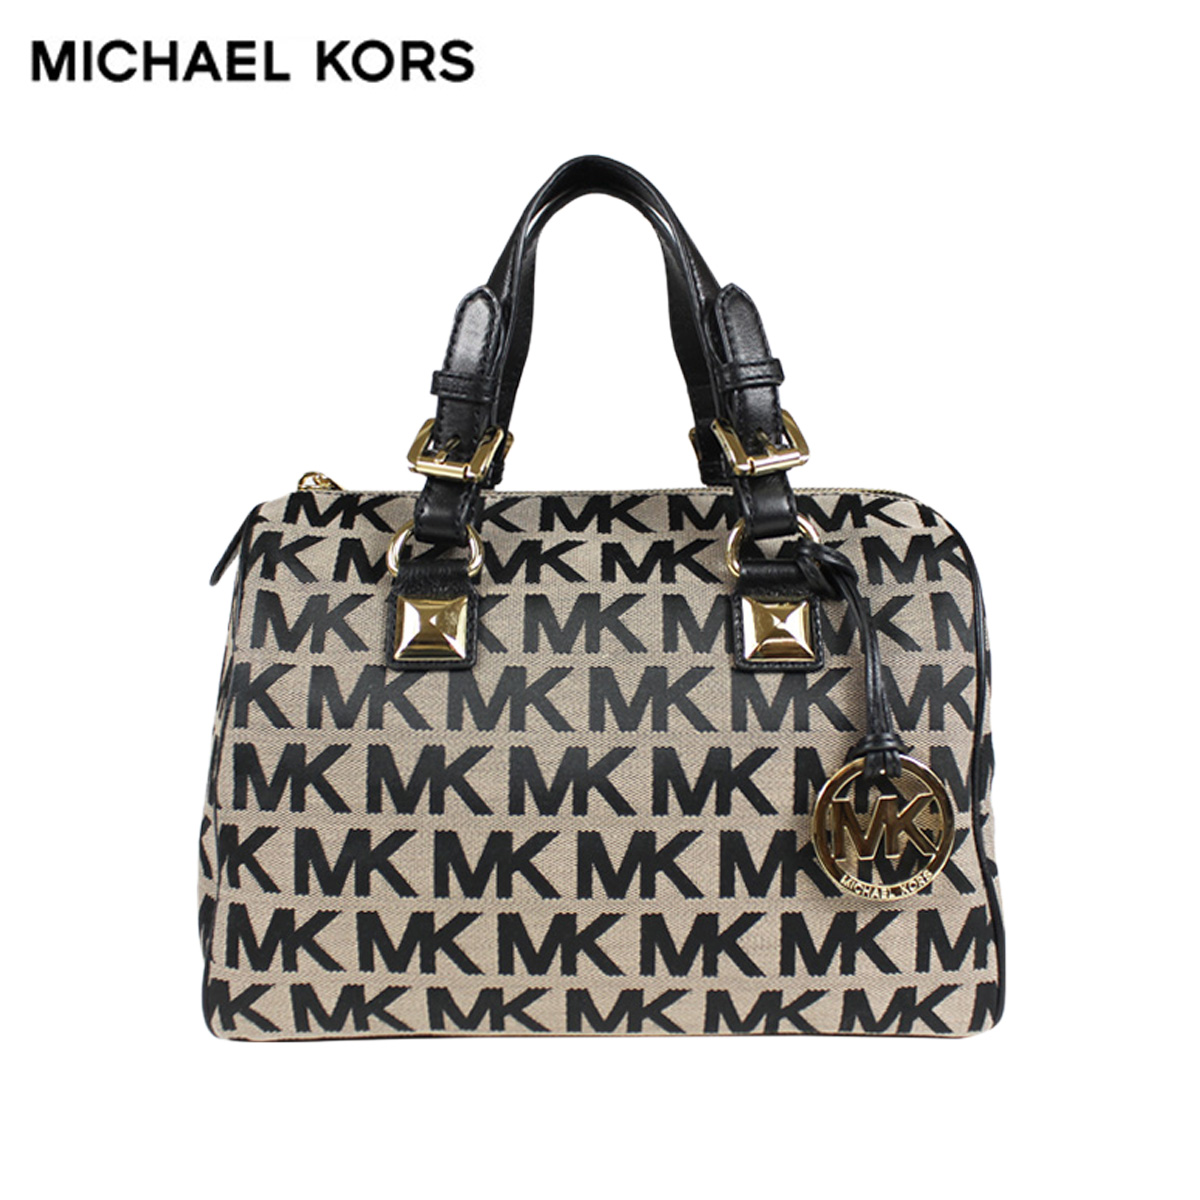 MK bags shop online